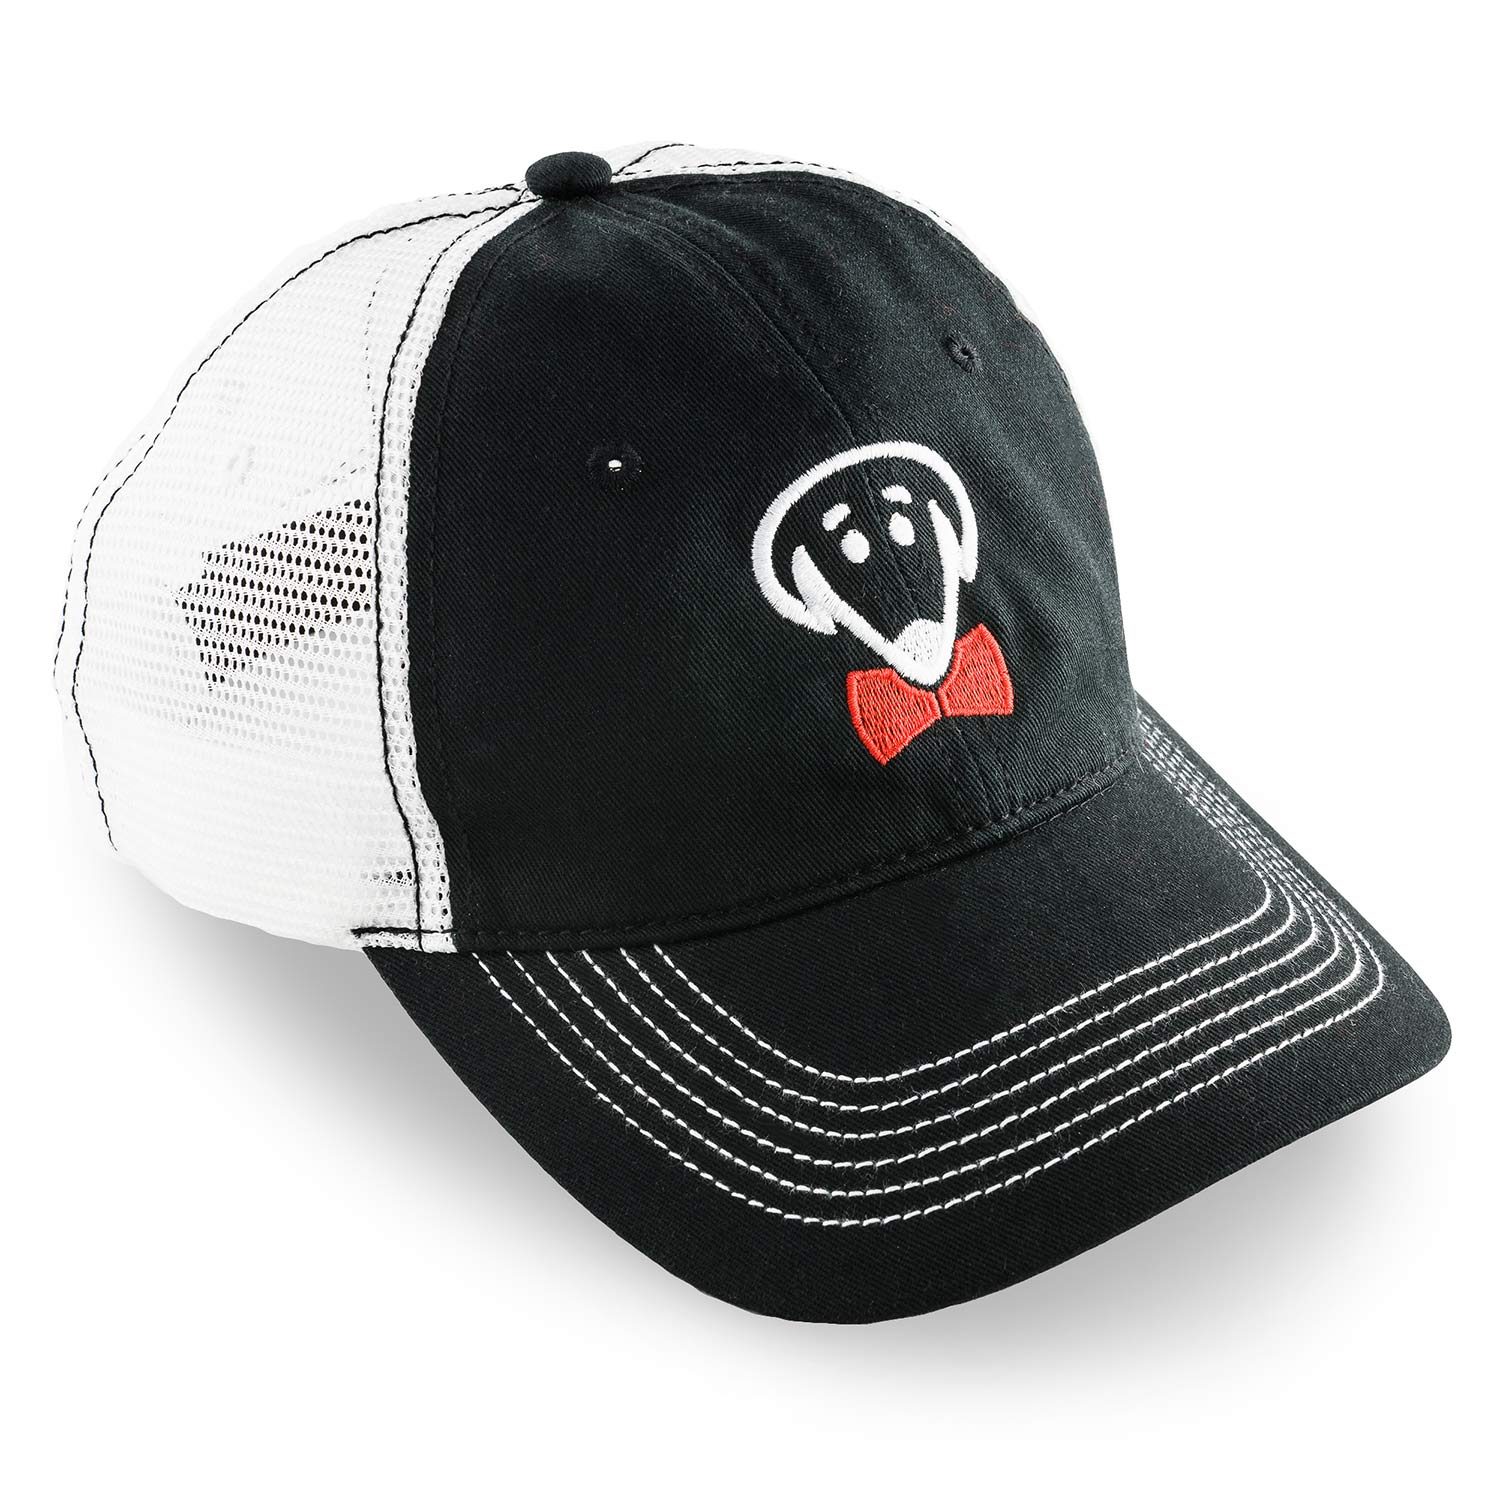 Beau Tyler Signature black and white mesh baseball hat